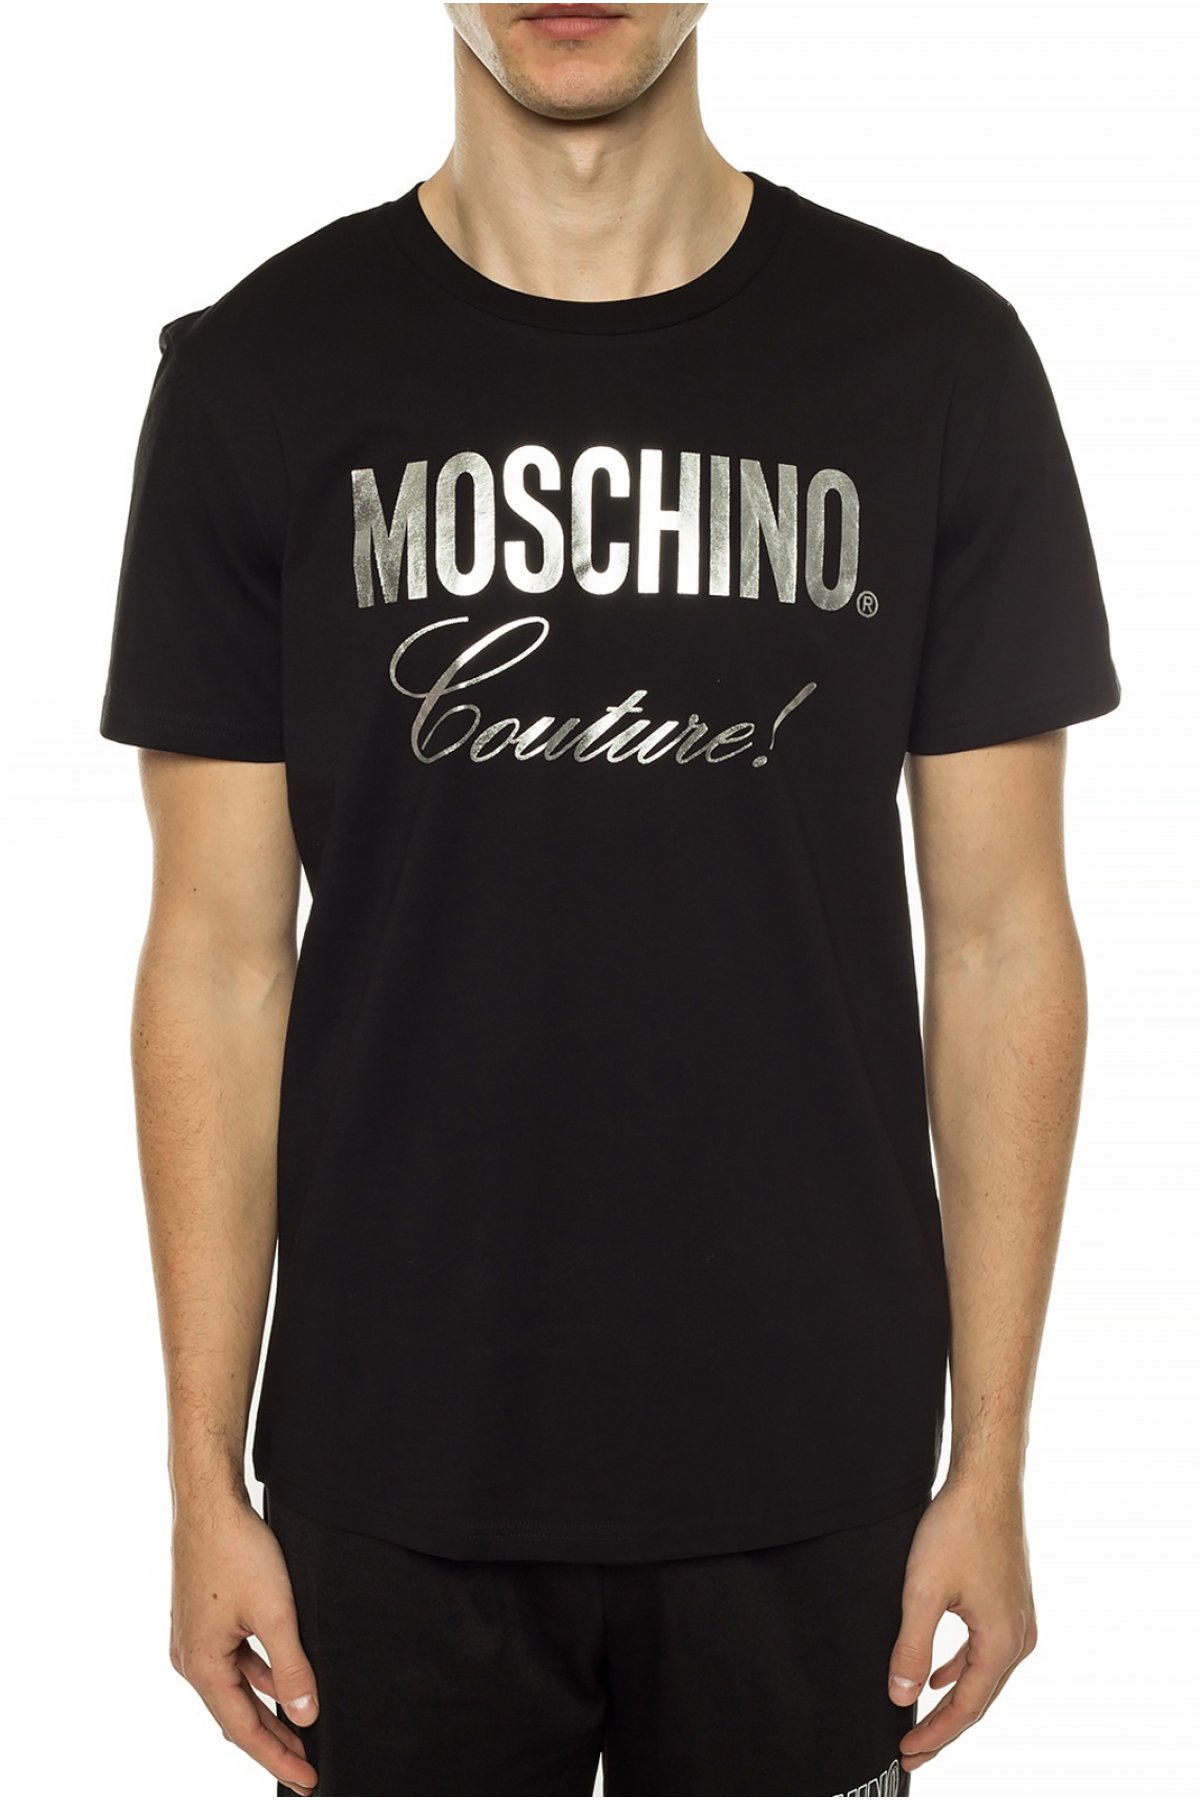 Moschino ZPA0715 tričko černé